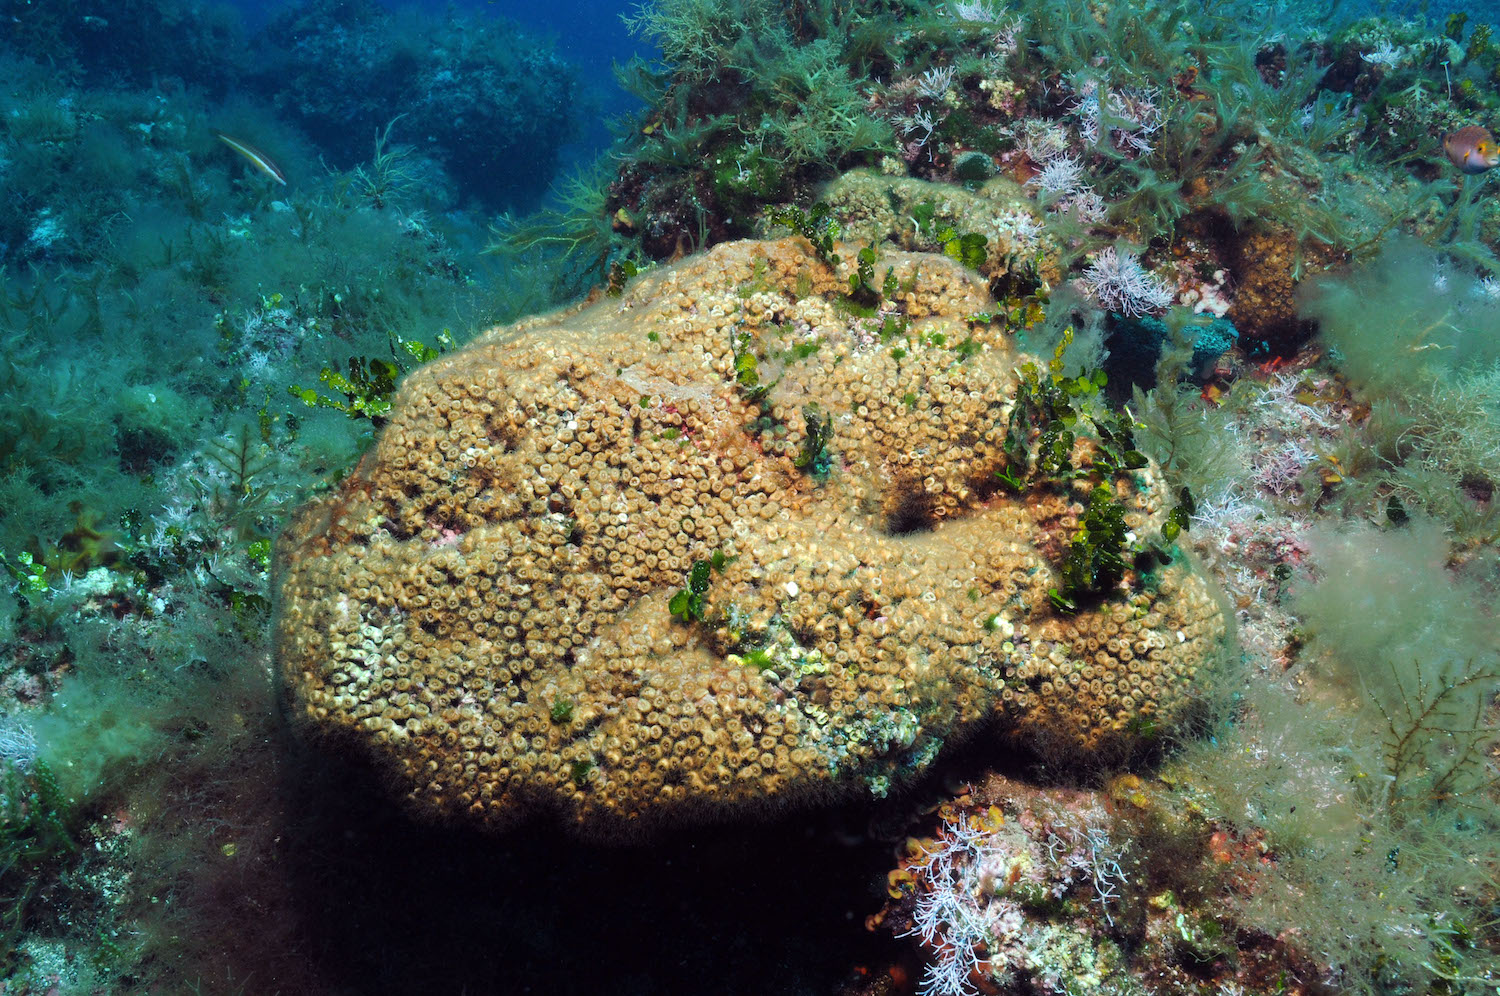 Cladocora caespitosa colony in the Columbretes Islands Marine Reserve.